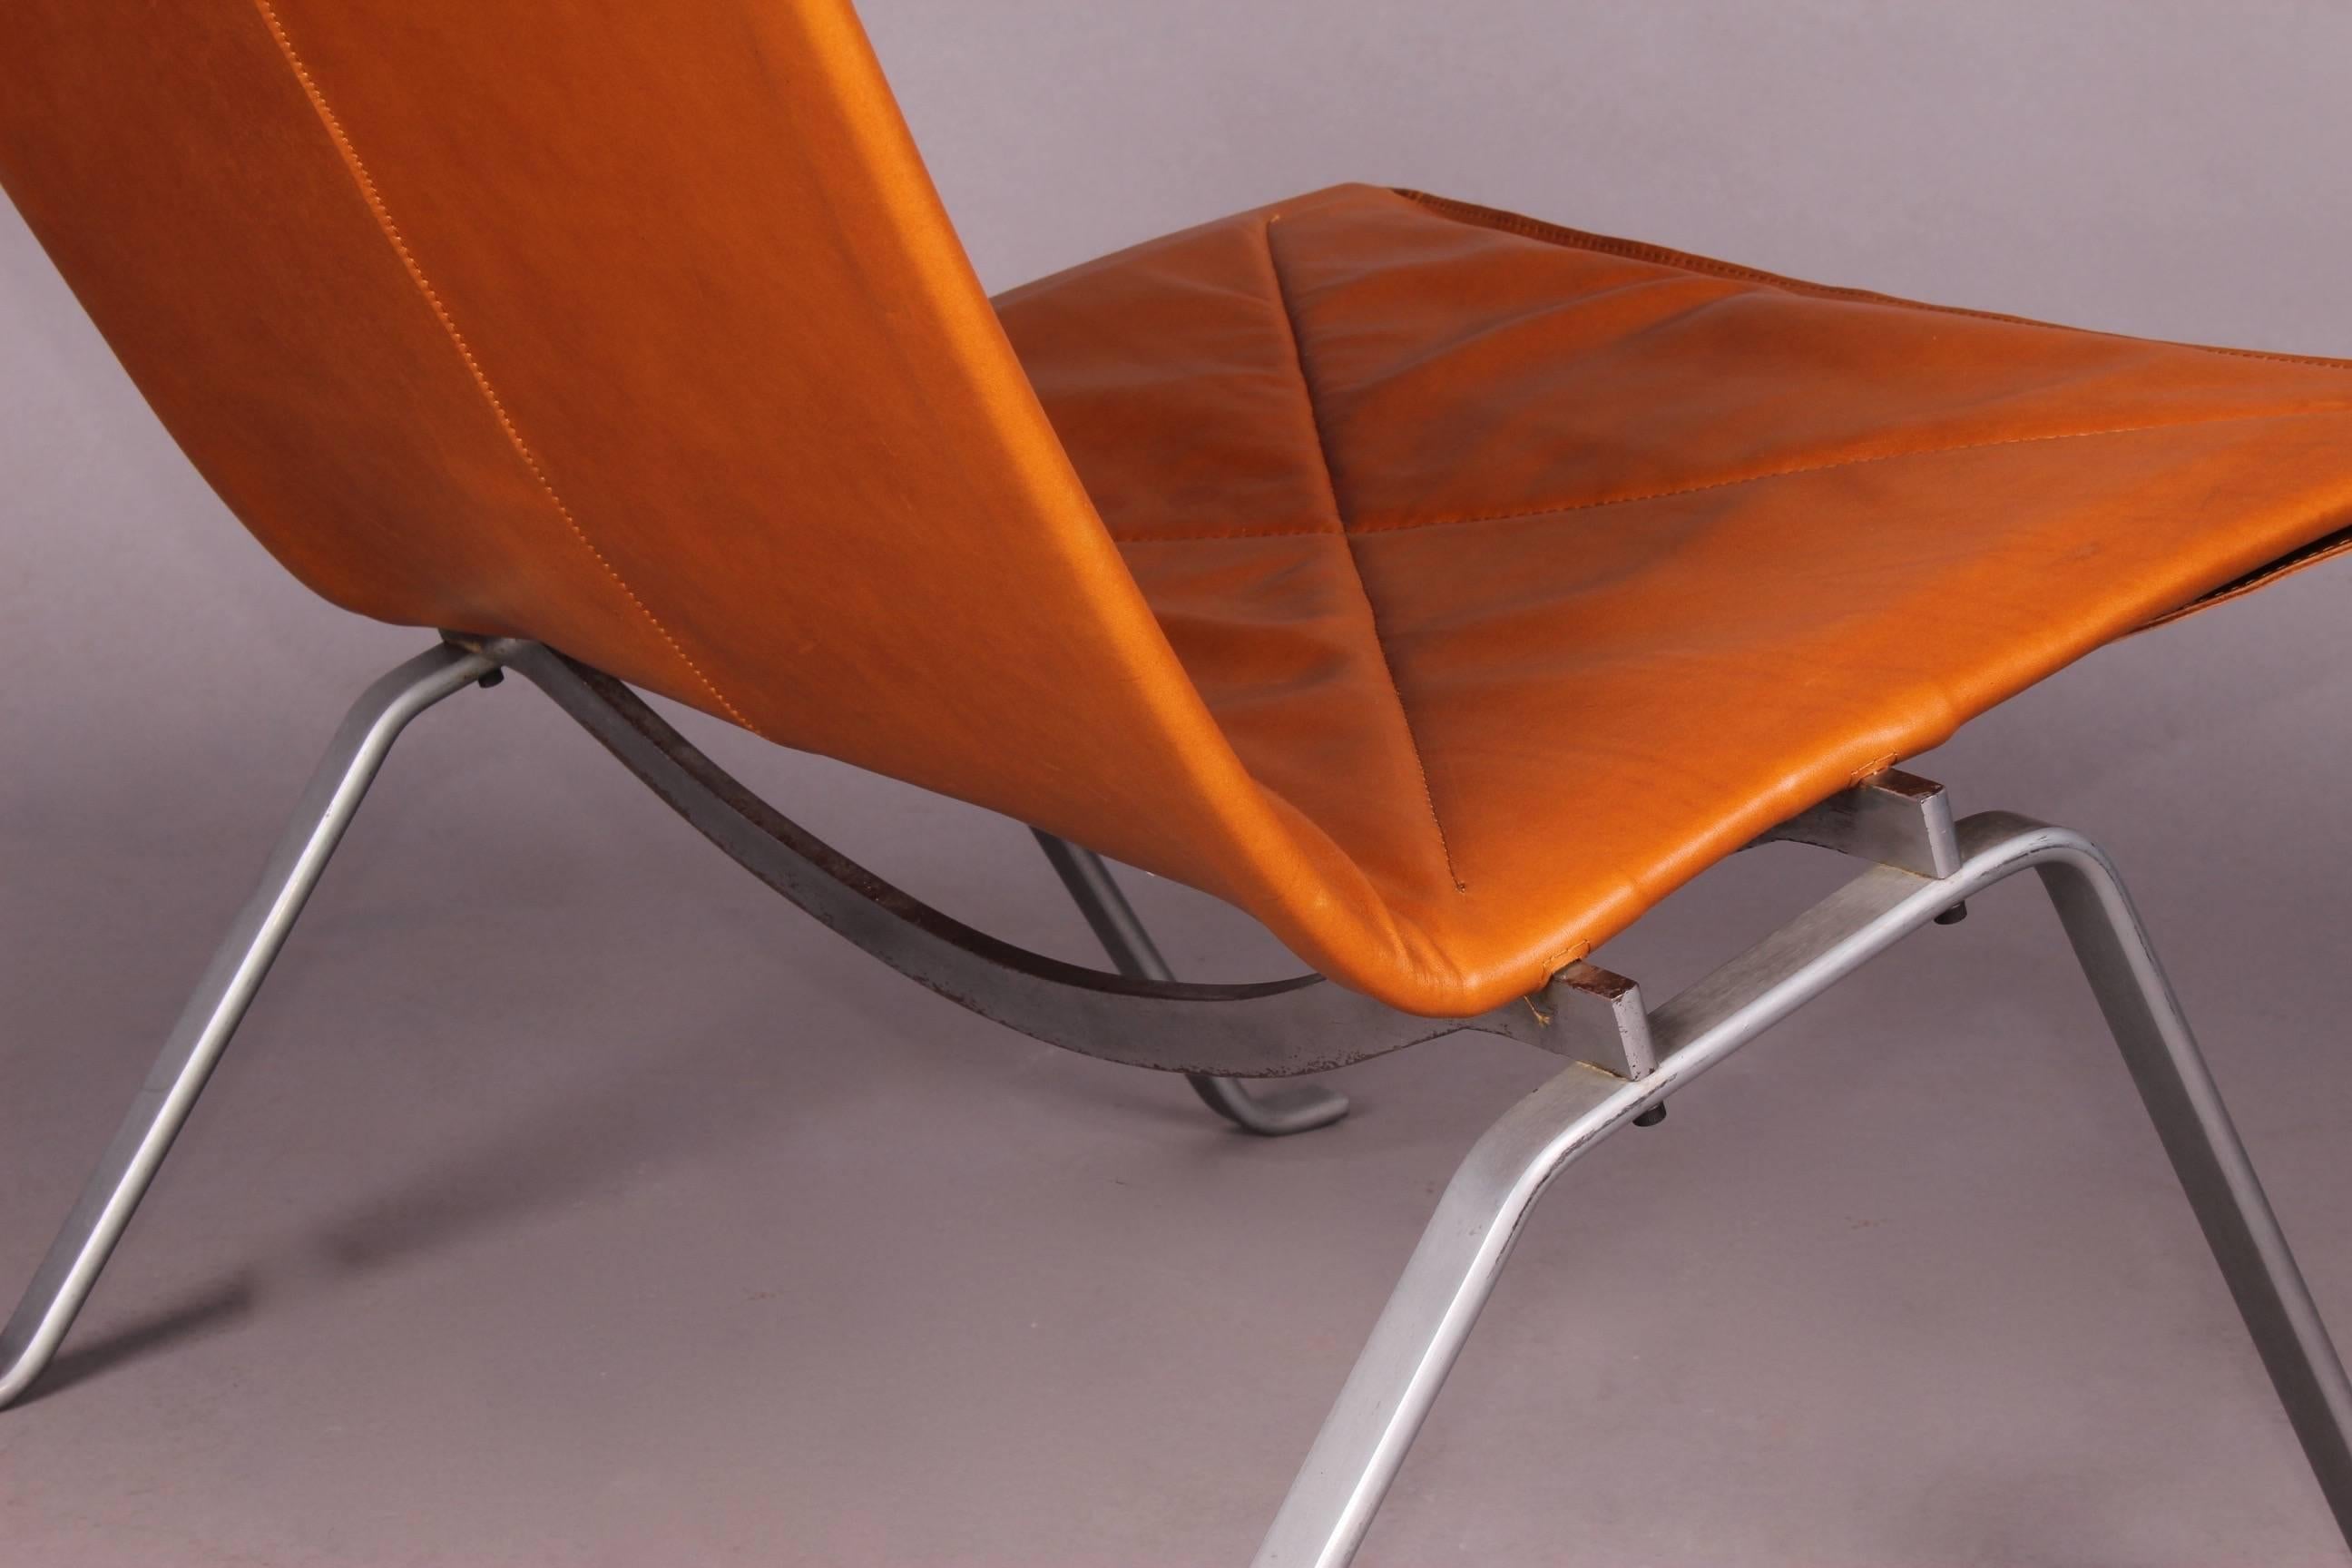 Steel Lounge Chair by Poul Kjaerholm Pk 22 ed Christensen